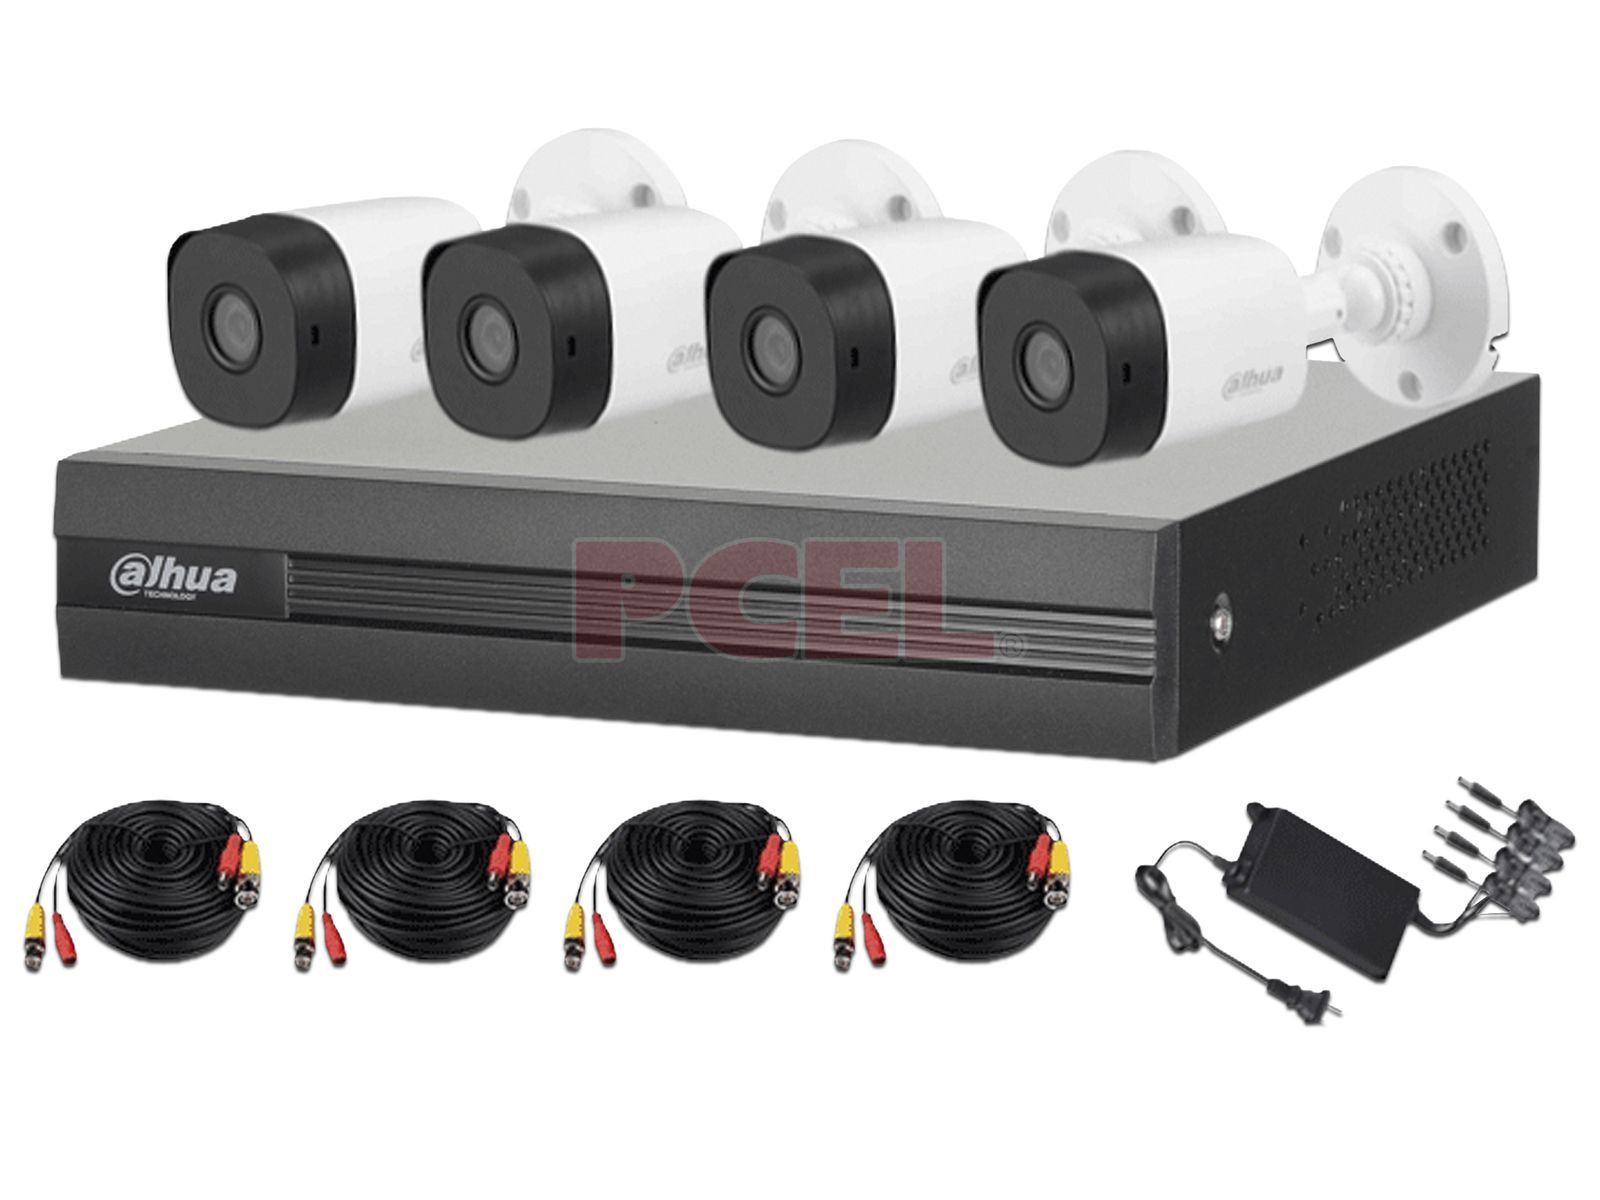 Kit de Videovigilancia Dahua / DVR 4 Canales / 4 Camaras FHD 1080p /  Plastico / DH-KIT/XVR1B04/4-B1A21